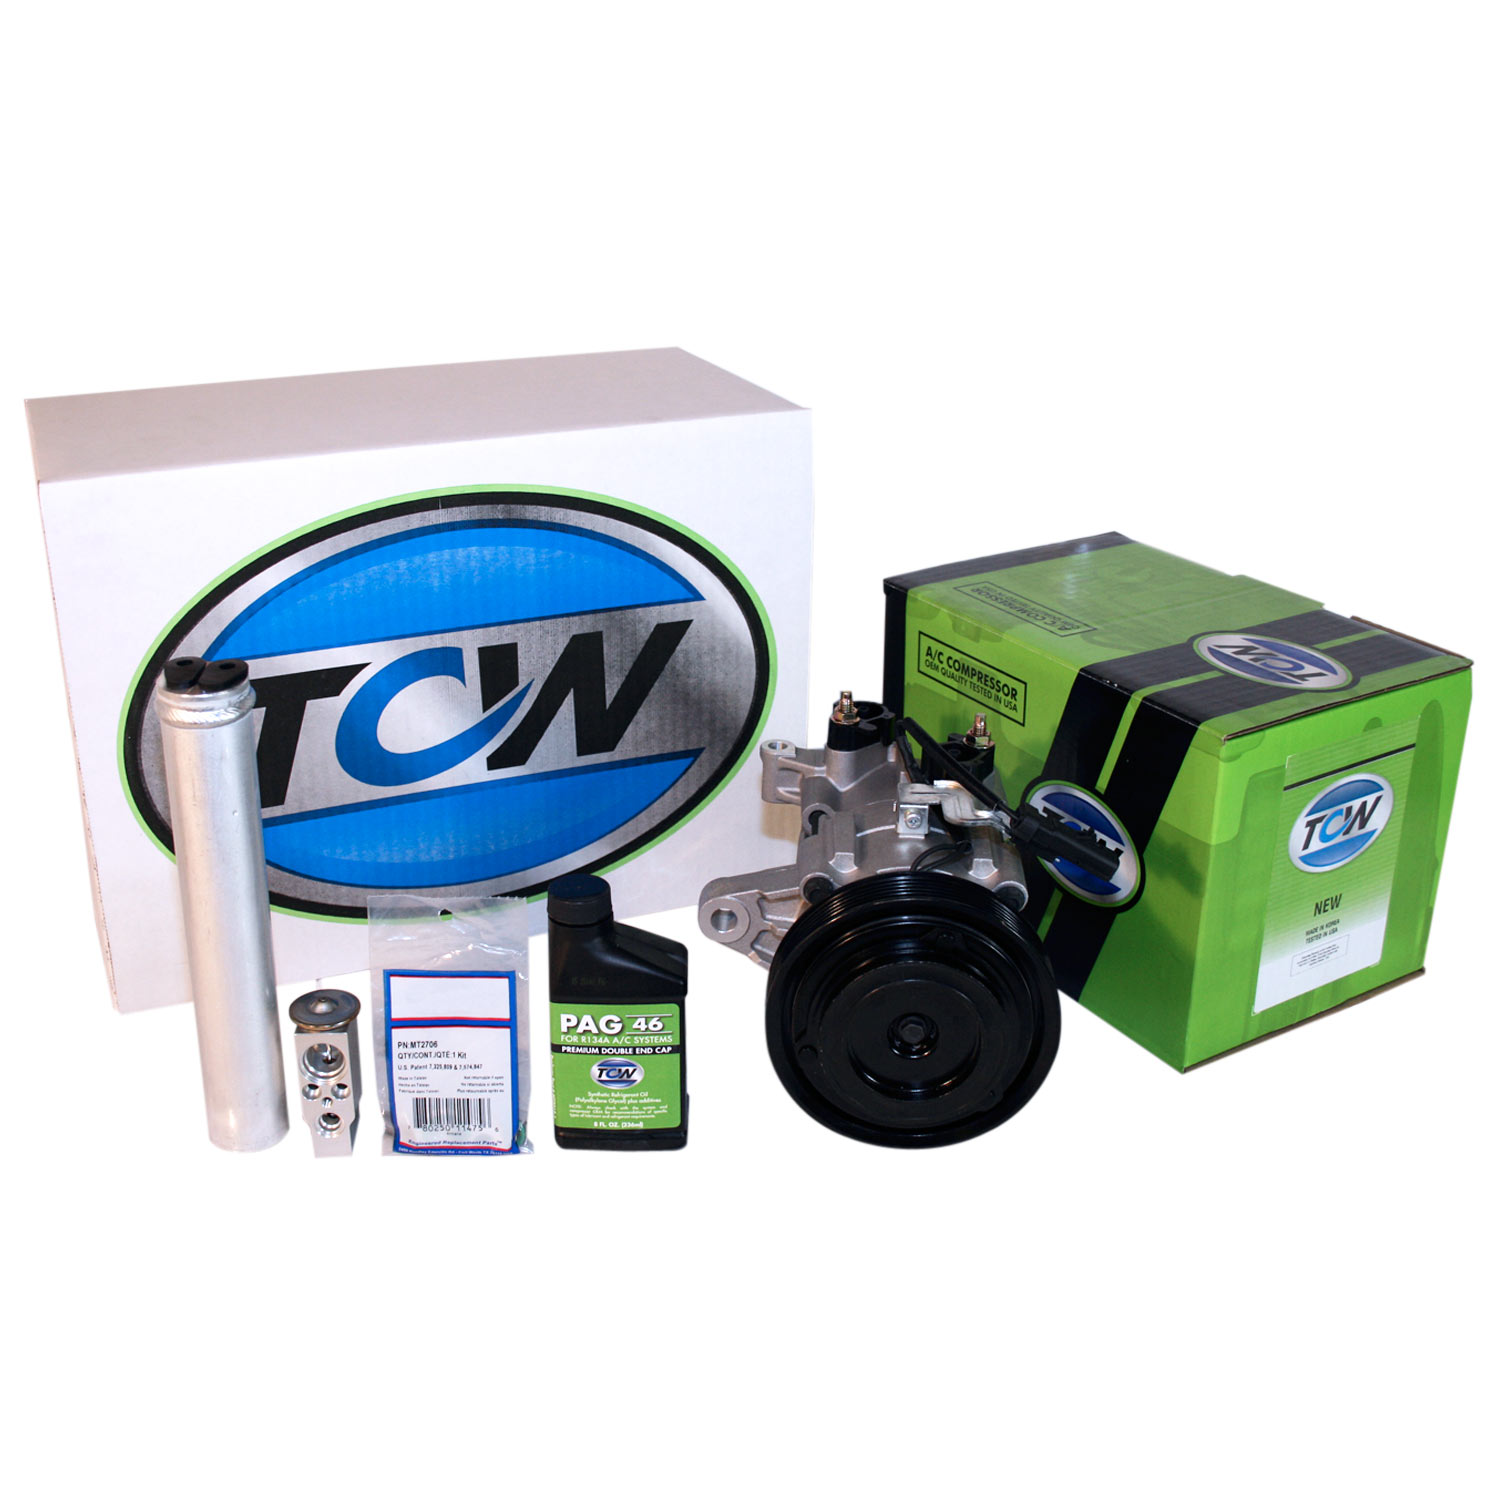 TCW Vehicle A/C Kit K1000279N New Product Image field_60b6a13a6e67c